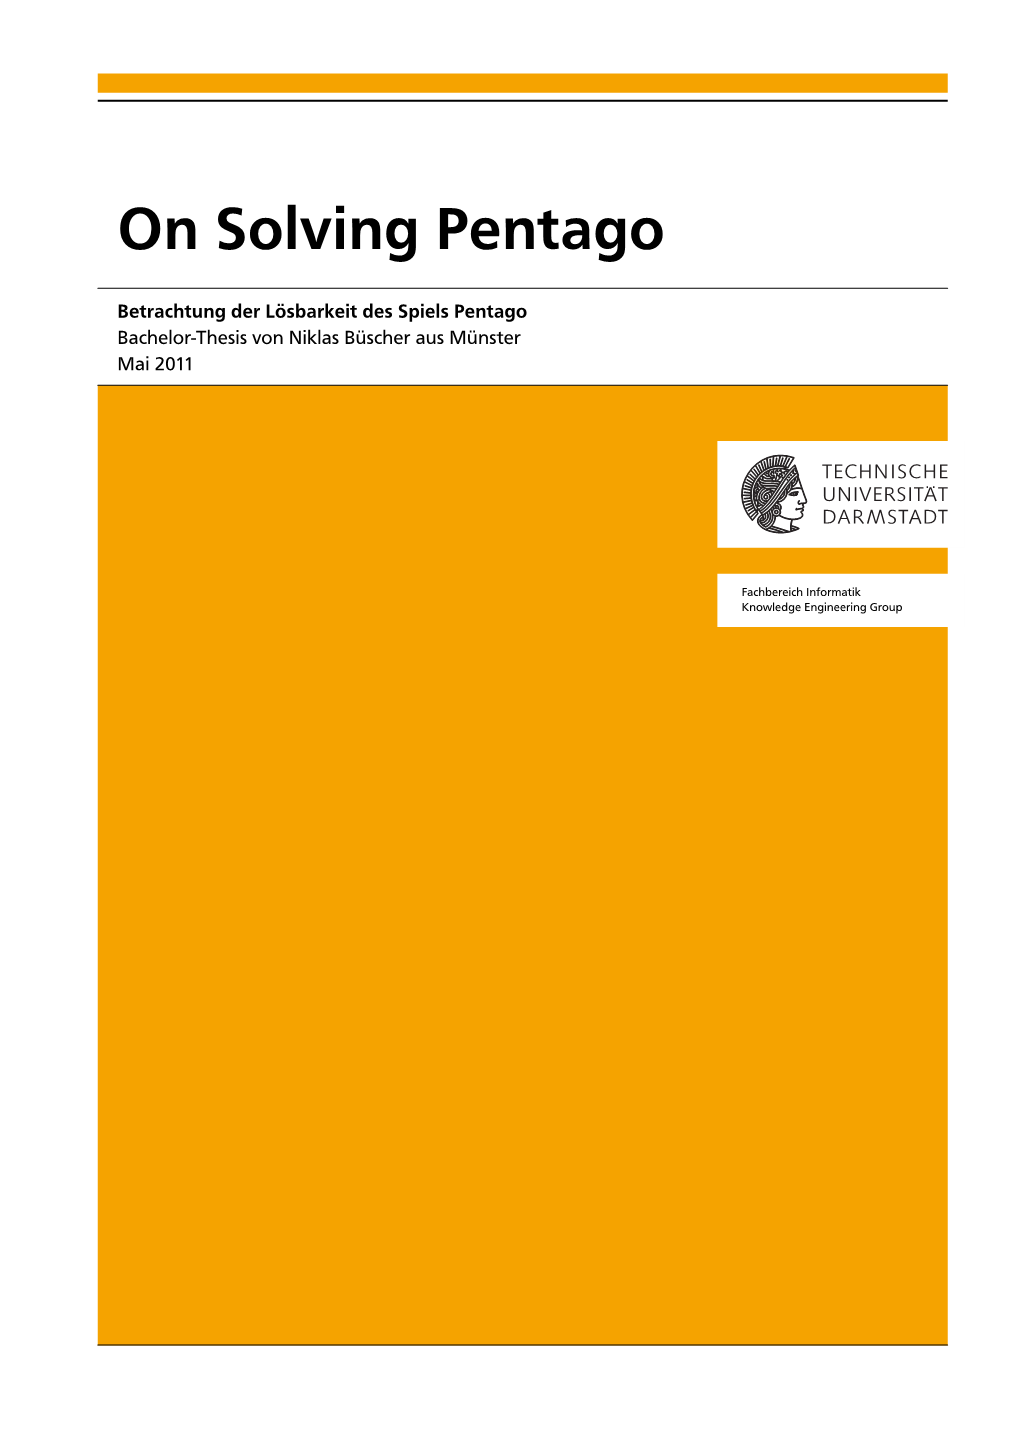 On Solving Pentago